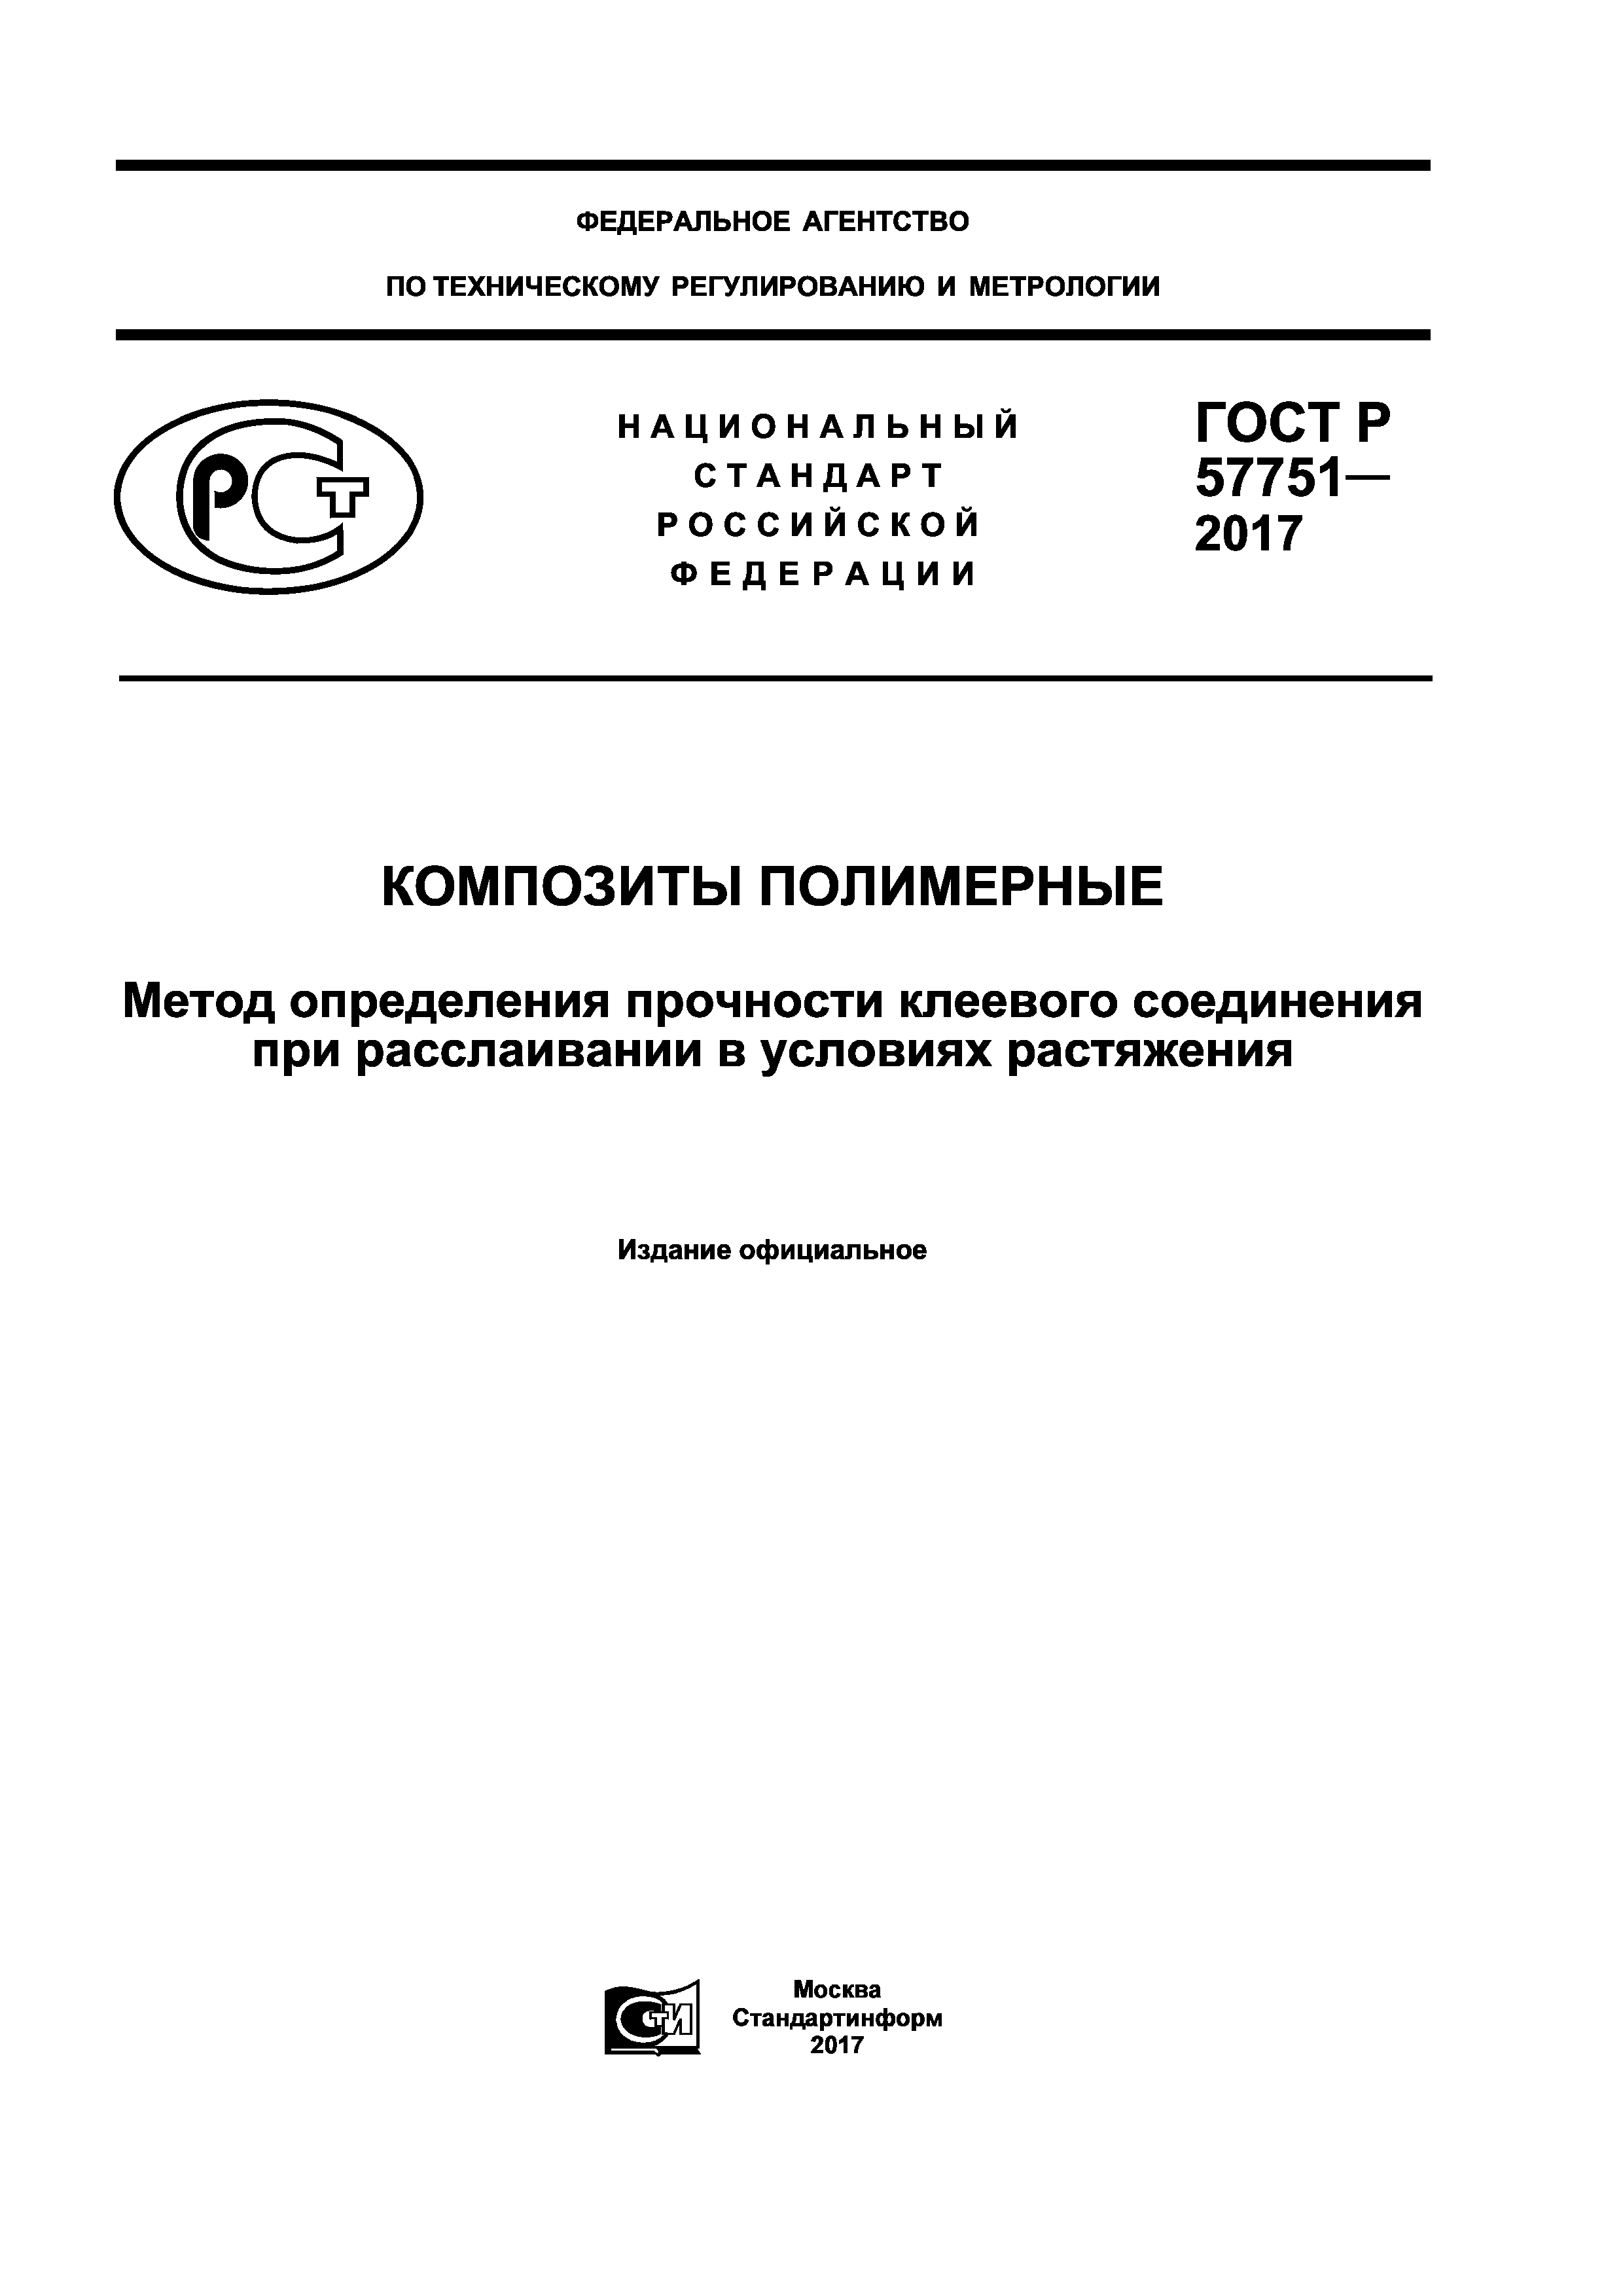 ГОСТ Р 57751-2017